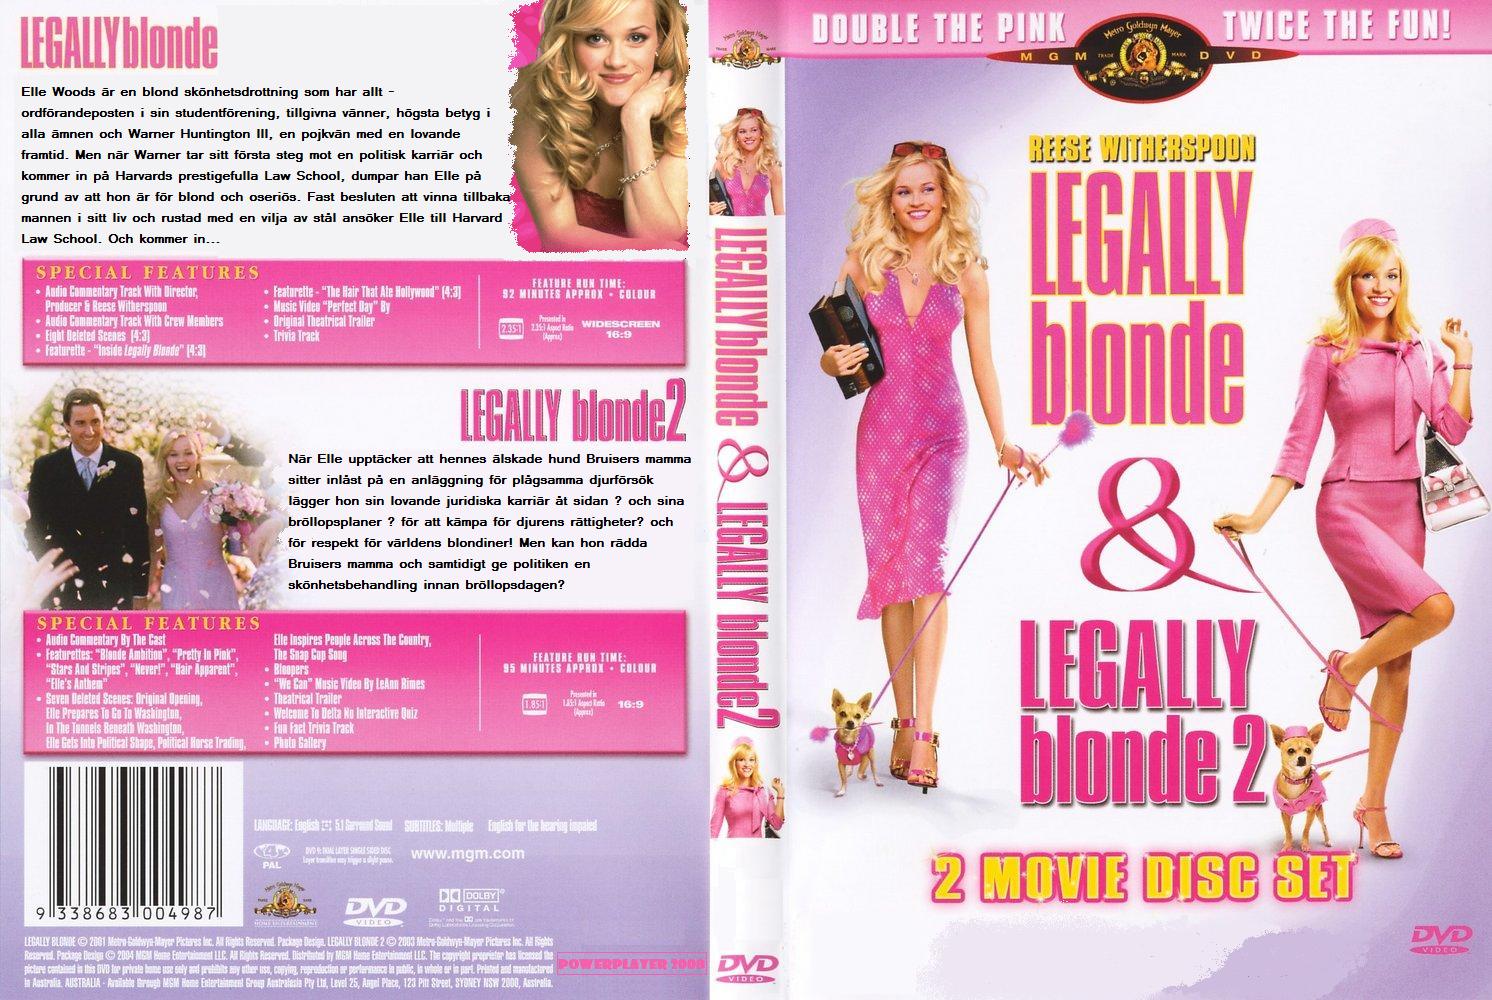 legally blonde 123. 